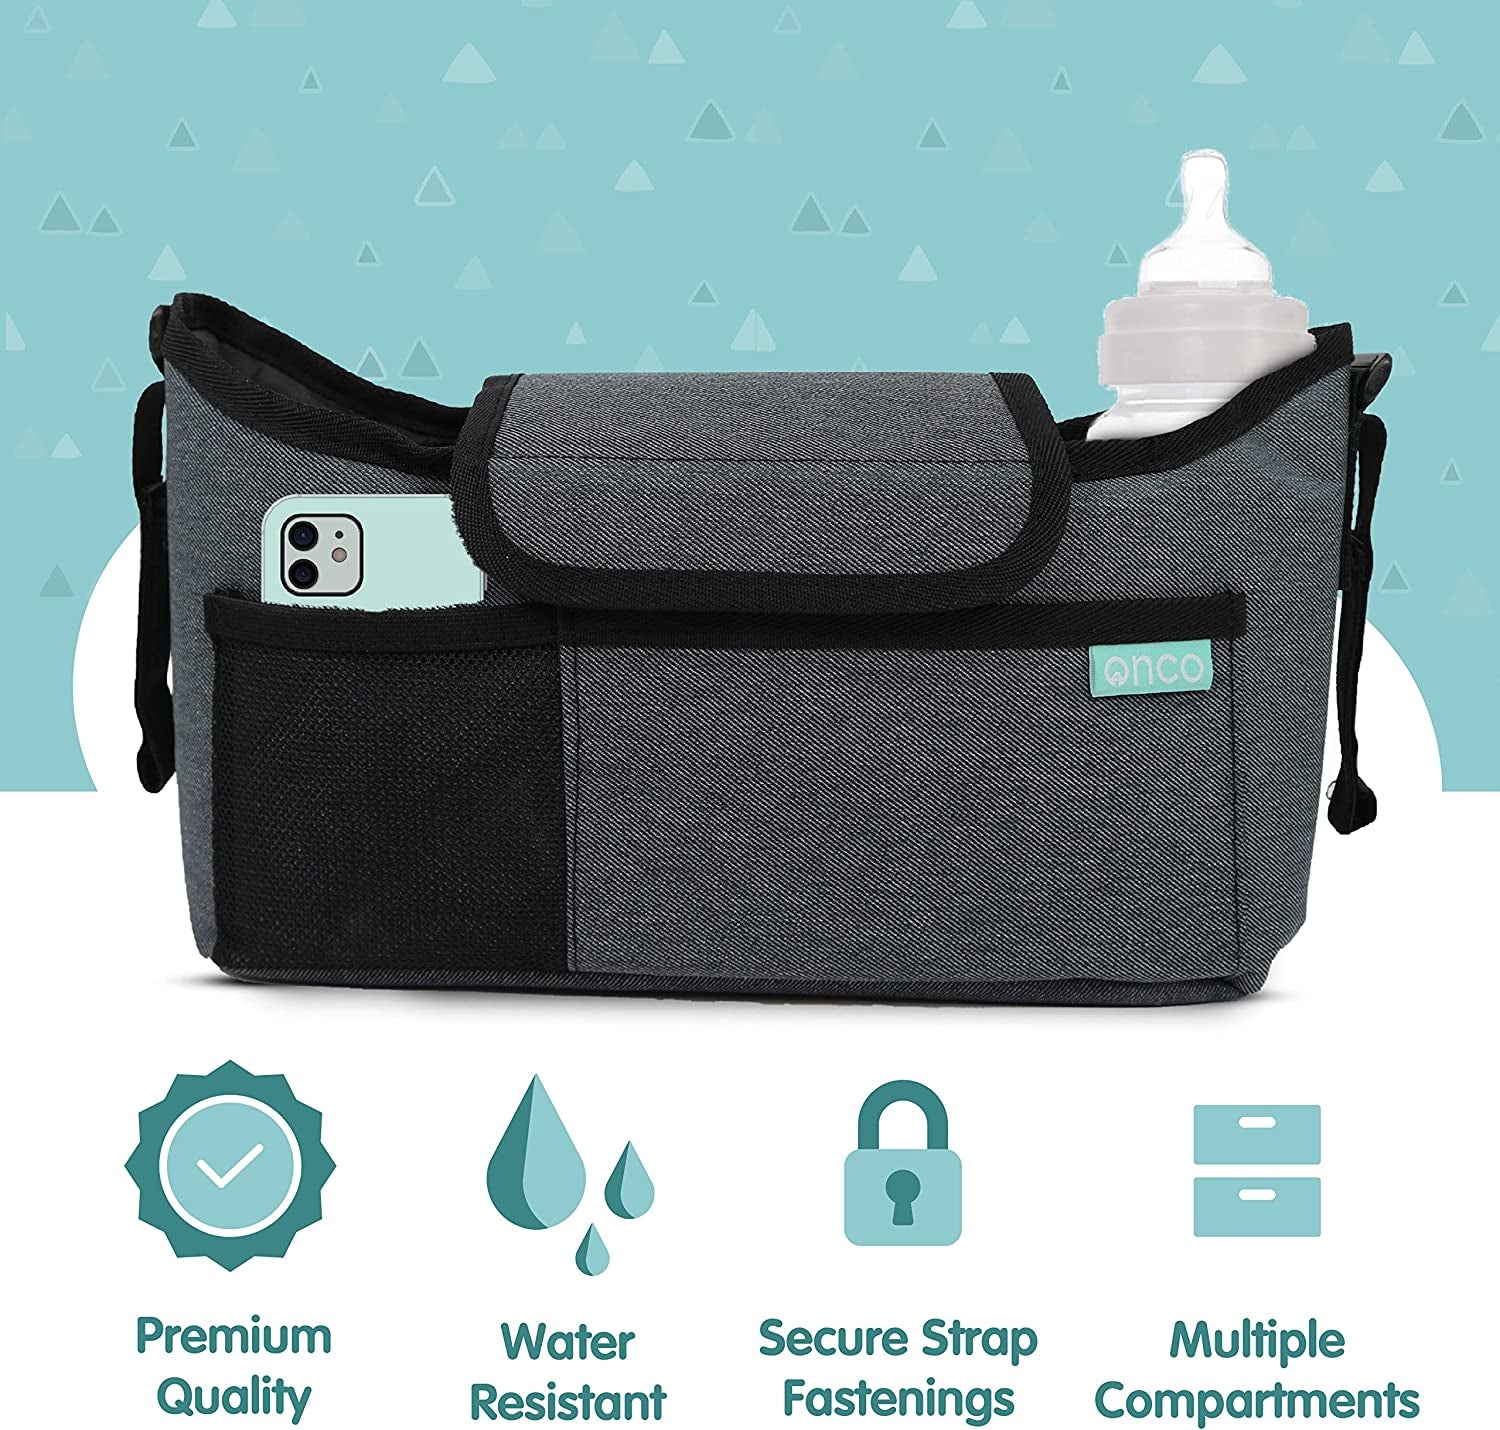 Onco Premium Pram Bag - Large Capacity Buggy Organiser with Pram Cup Holder - Ultra Secure Universal Fit Pram Accessories (Charcoal Grey)